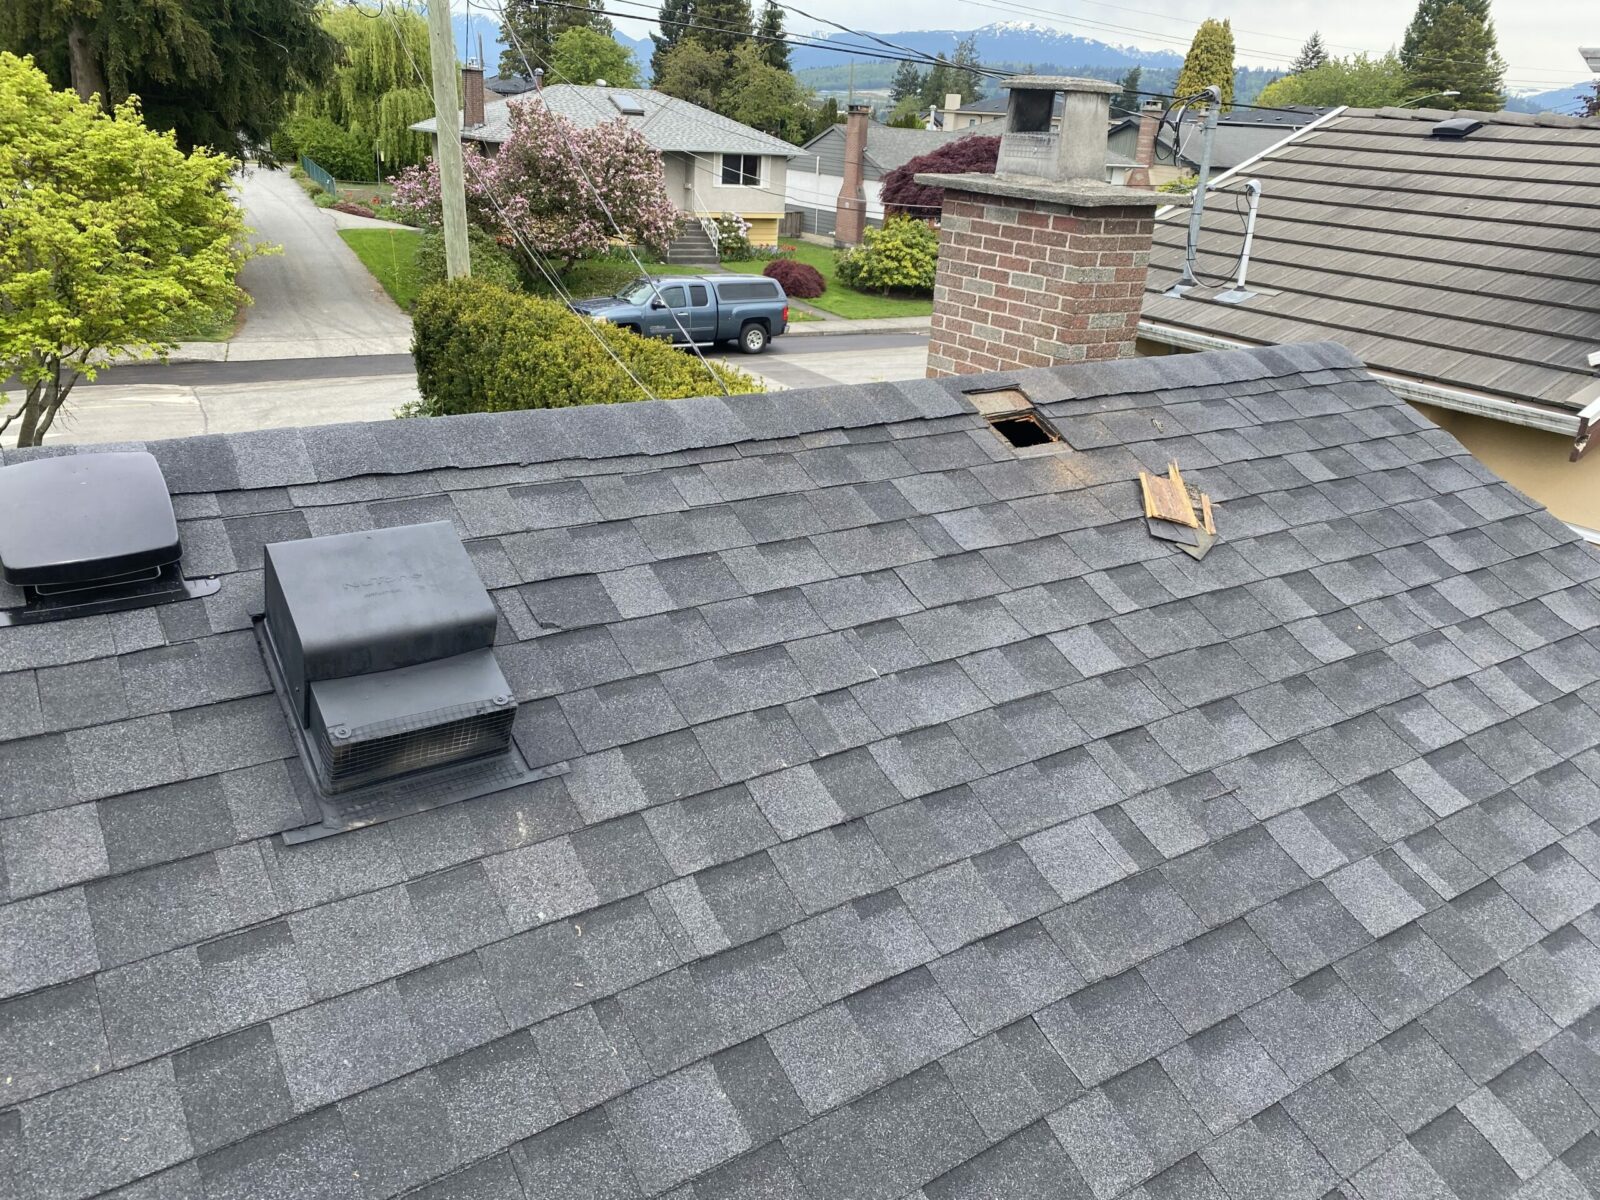 B-vent roof venting repairs